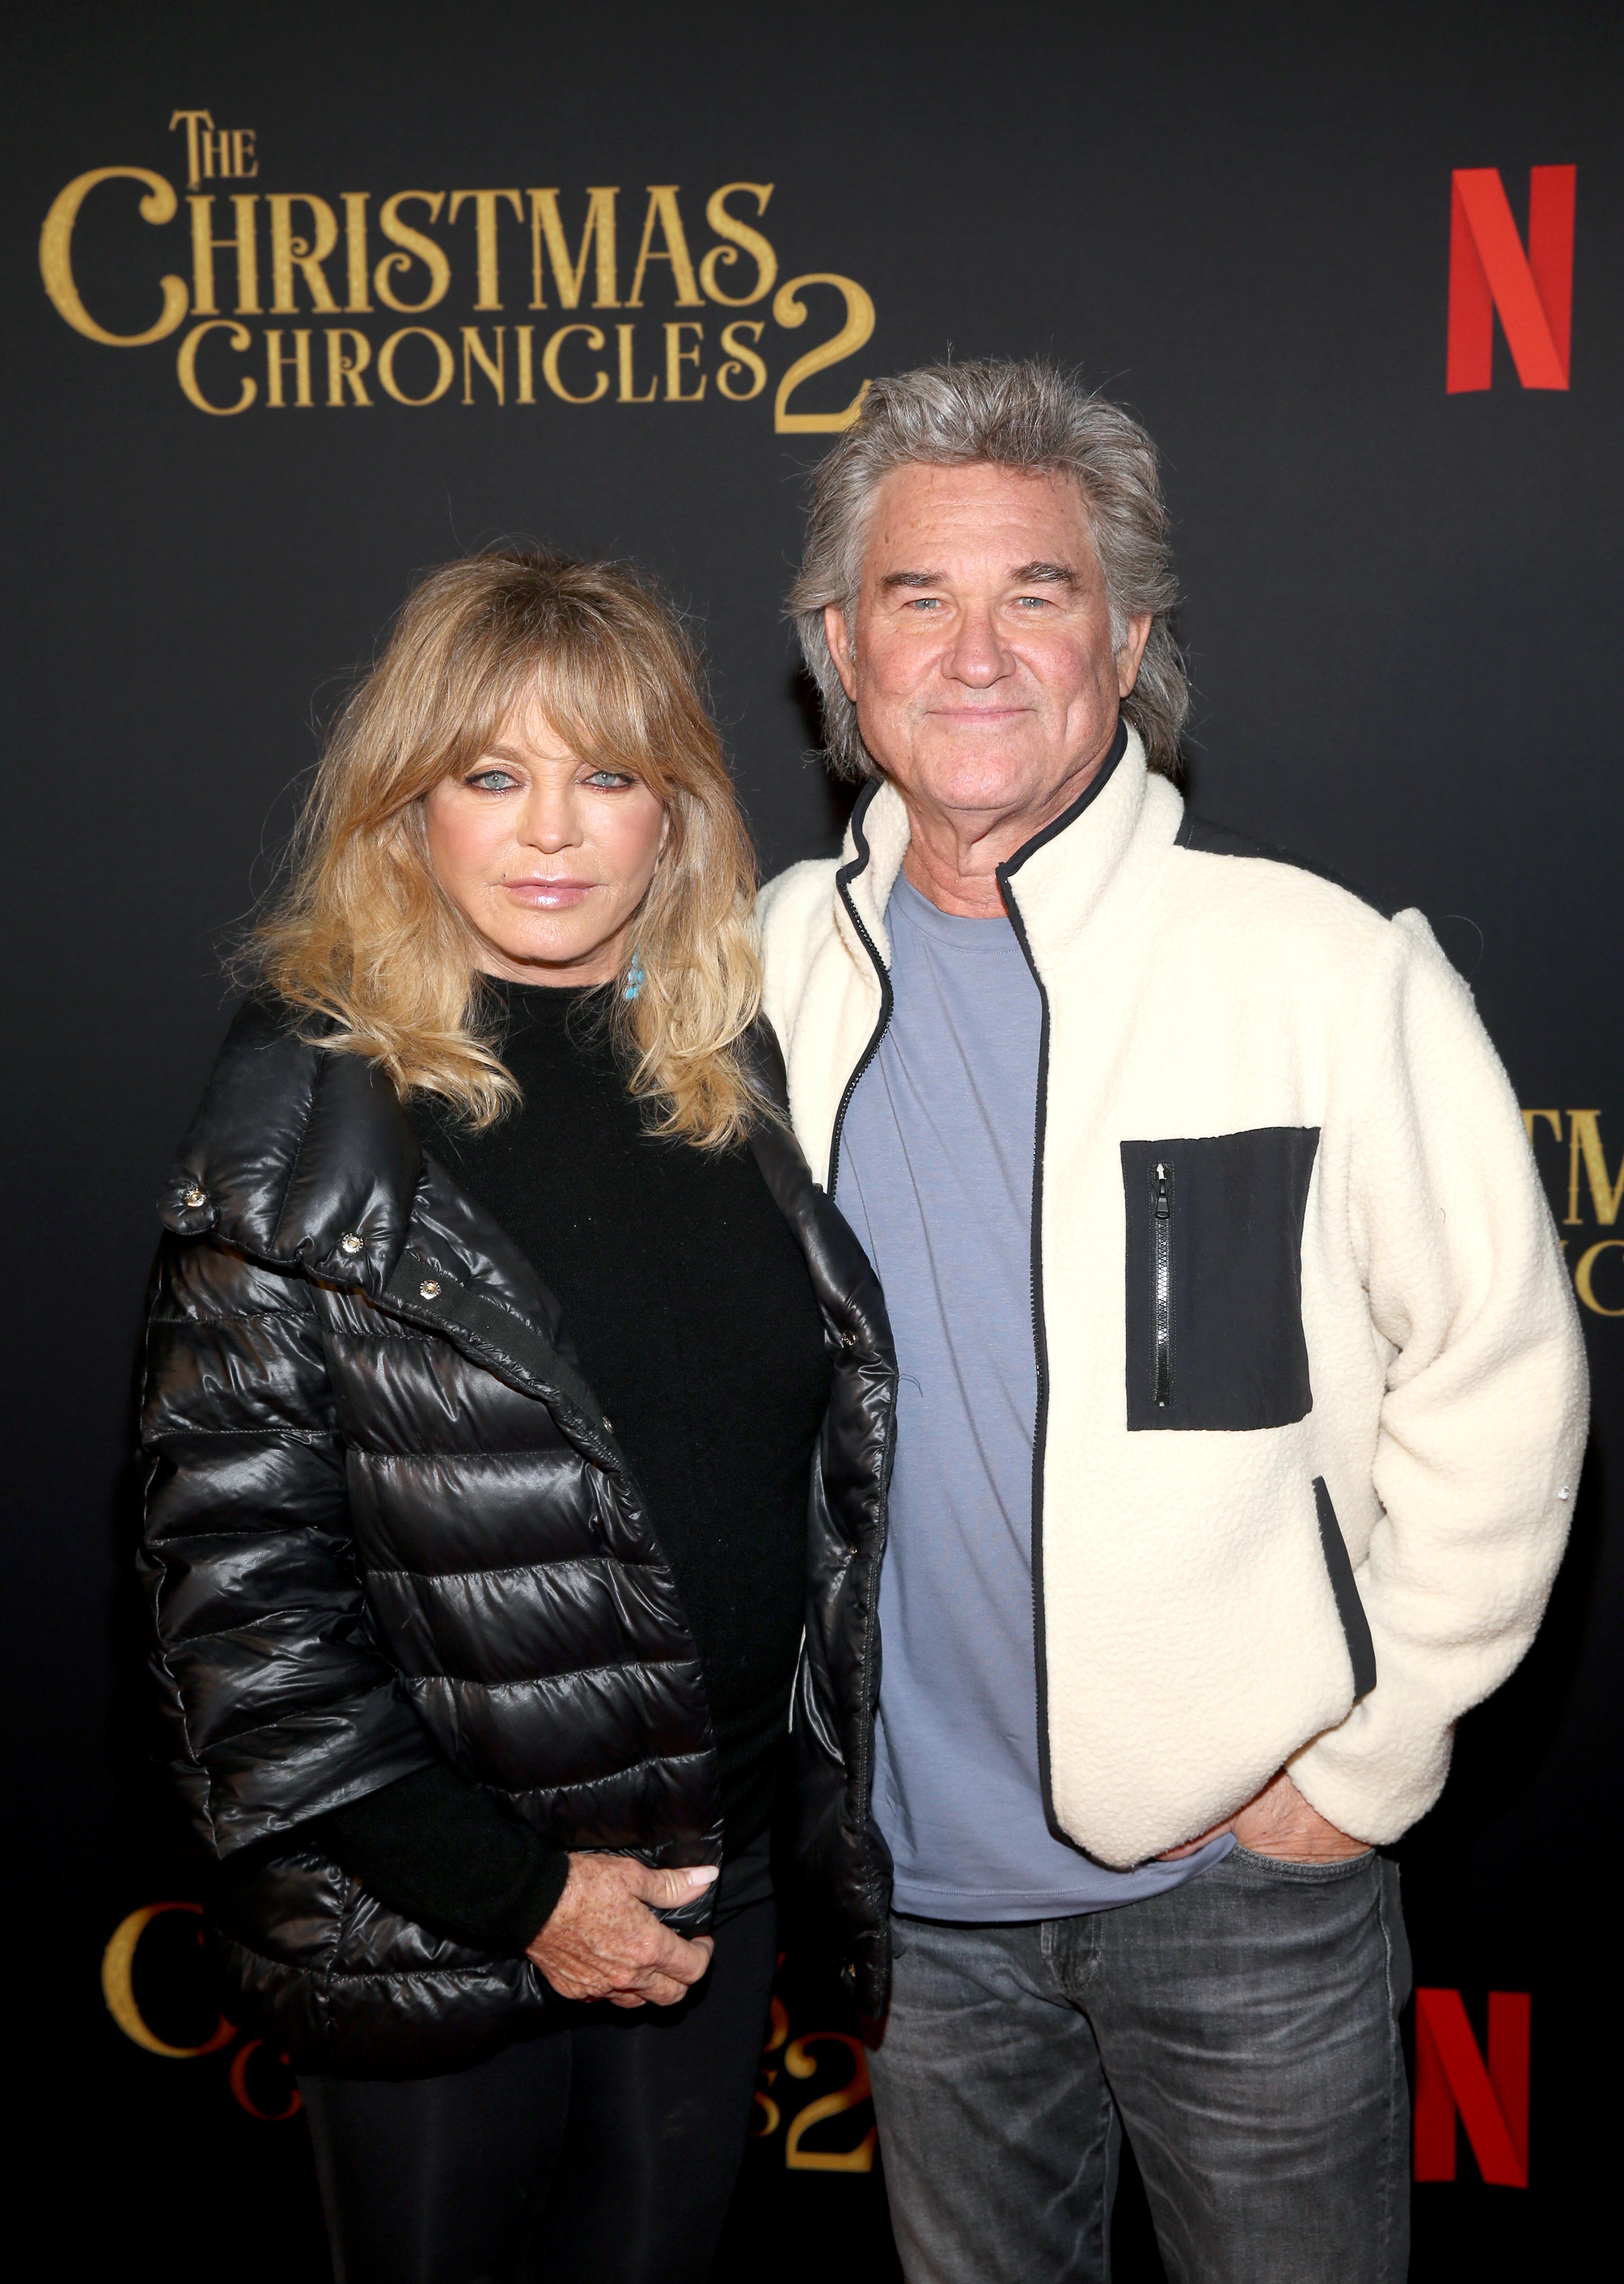 Goldie Hawn y Kurt Russell asisten al evento de autocine "The Christmas Chronicles: Part Two" de Netflix en The Grove el 19 de noviembre de 2020 en Los Ángeles, California. | Foto: Getty Images